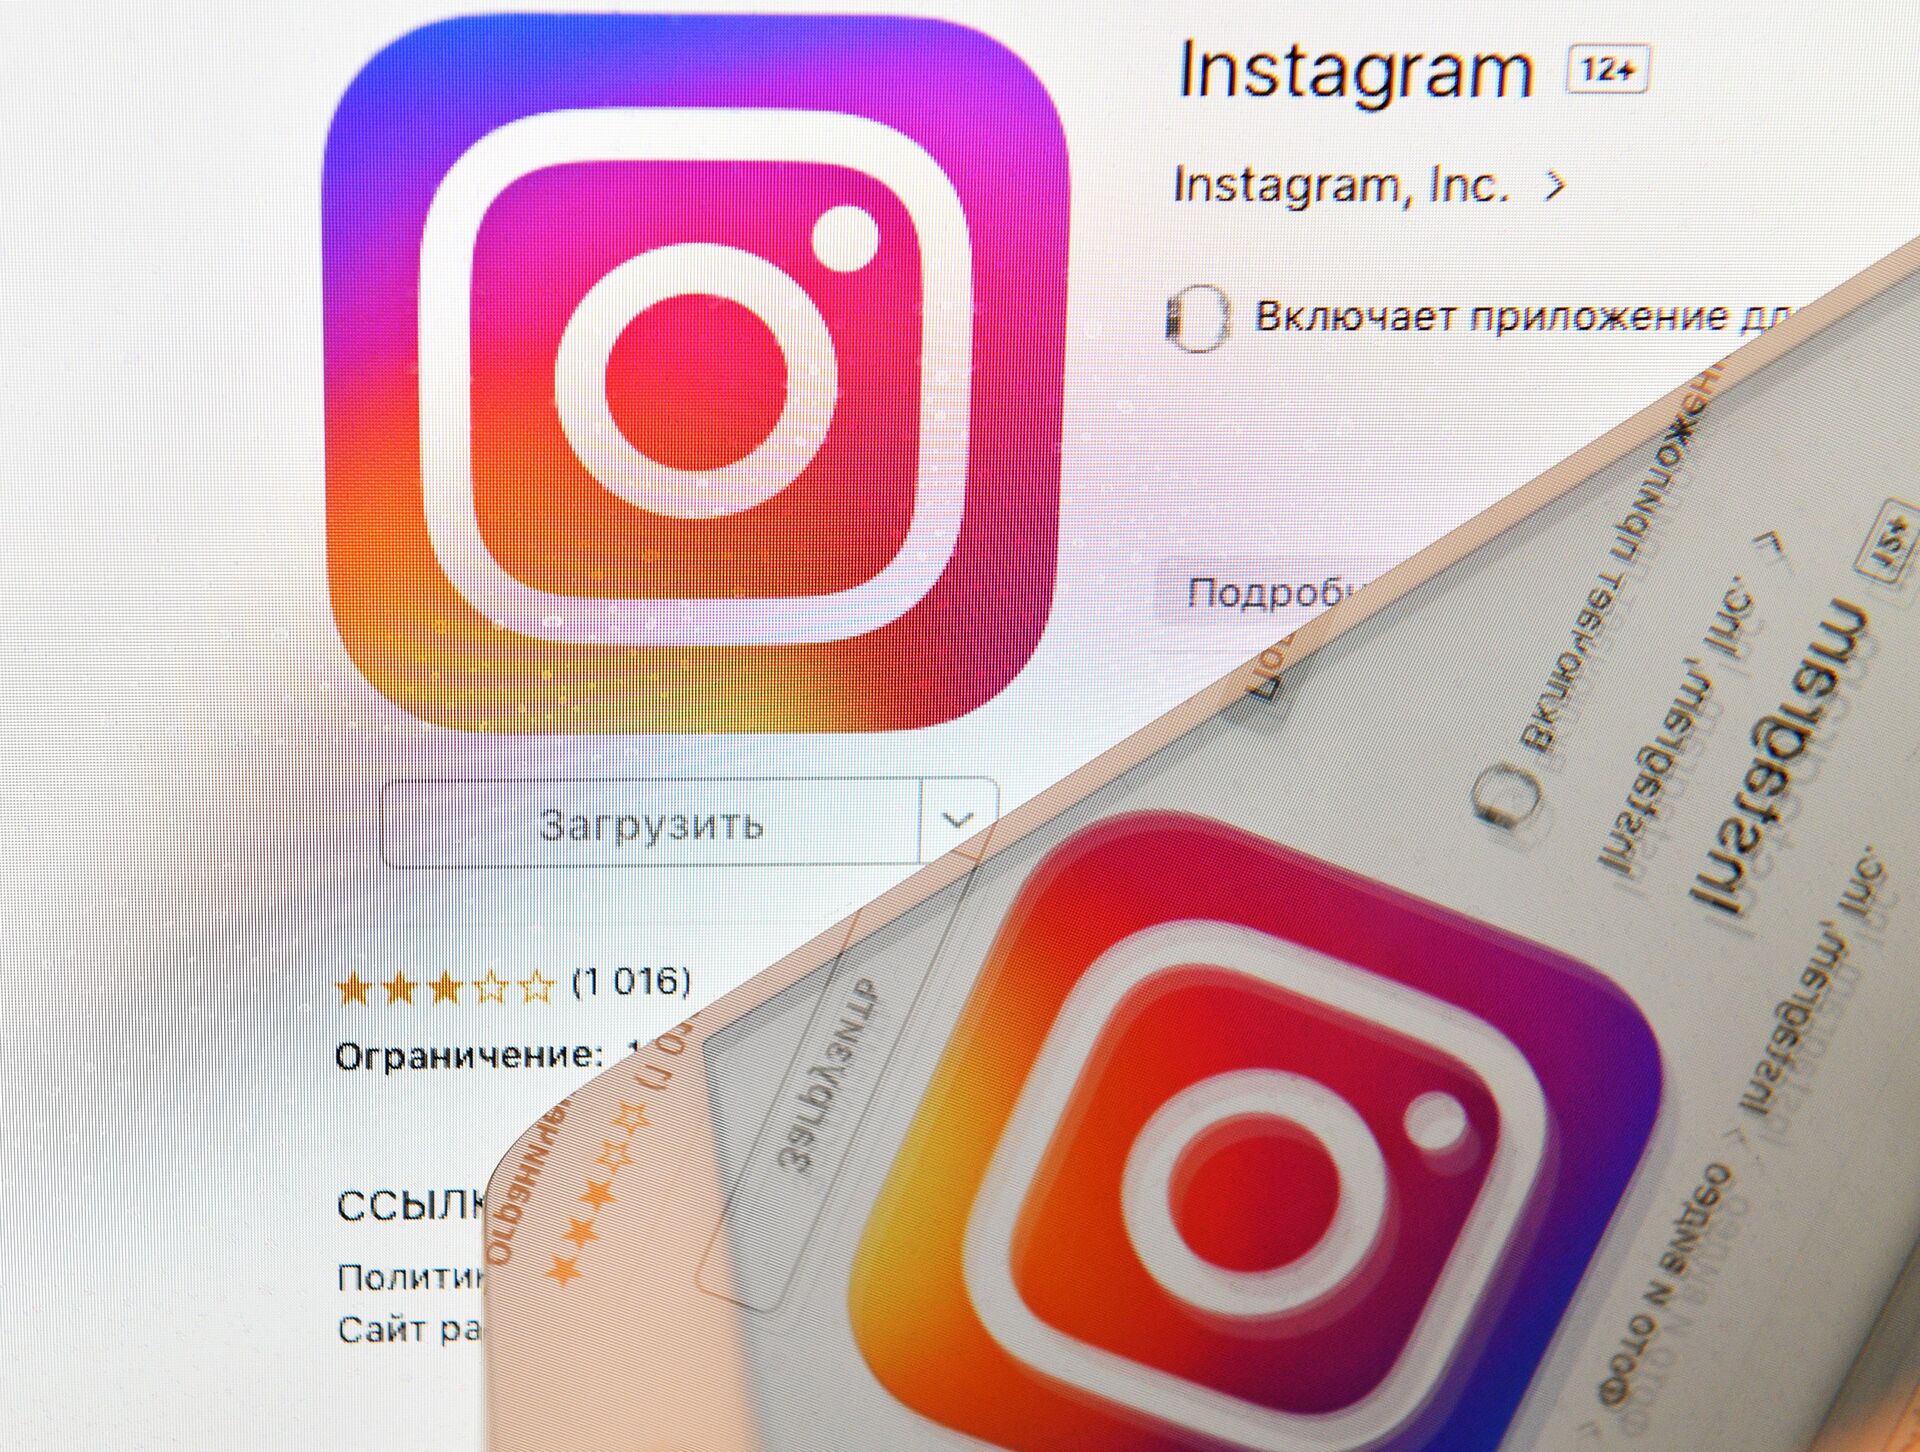 Icon of Instagram social media as seen on a smartphone screen - Sputnik International, 1920, 05.10.2021